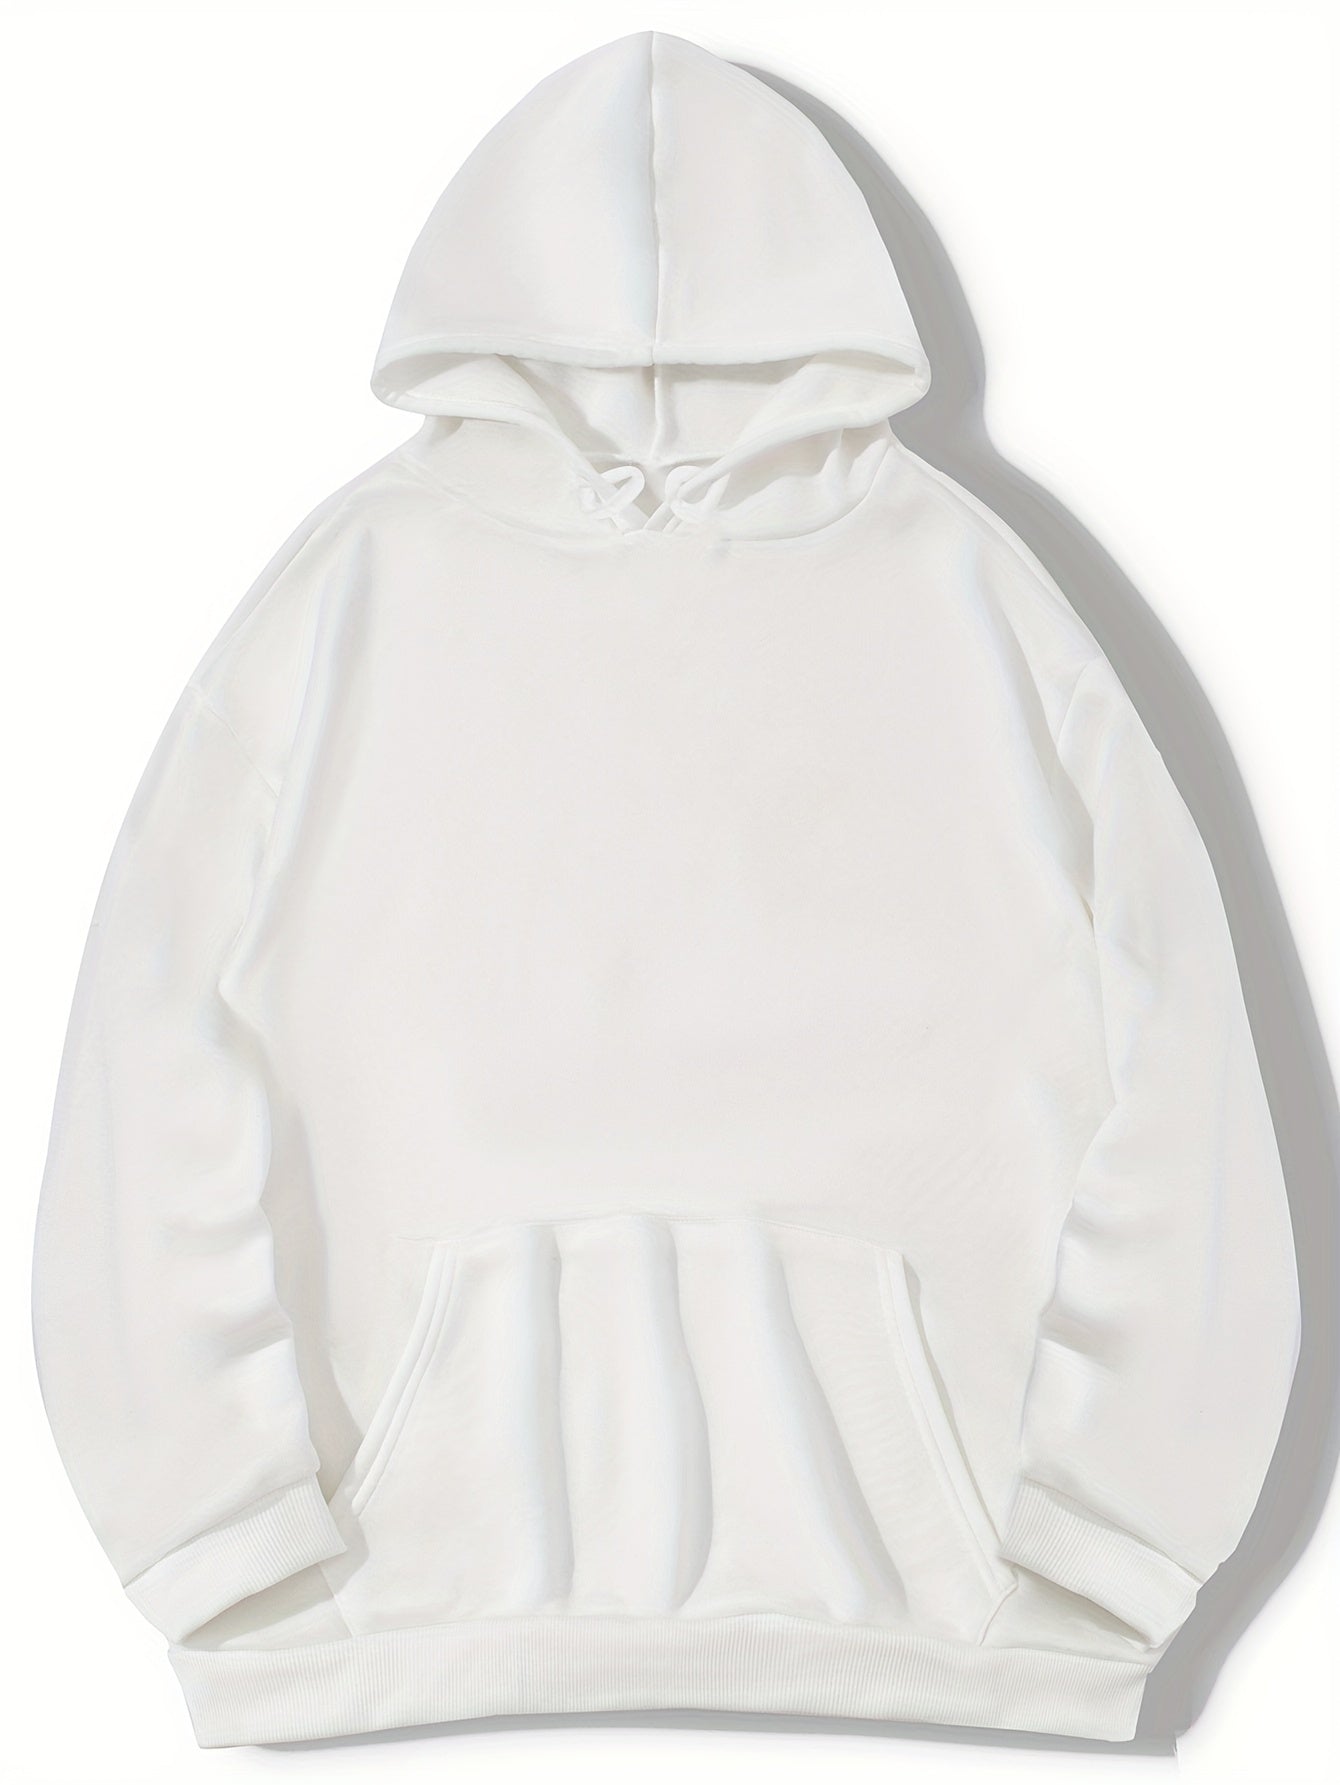 Antmvs Grey Thermal Hoodies, Kangaroo Pocket Casual Sweatshirt For Fall & Winter, Women's Clothing